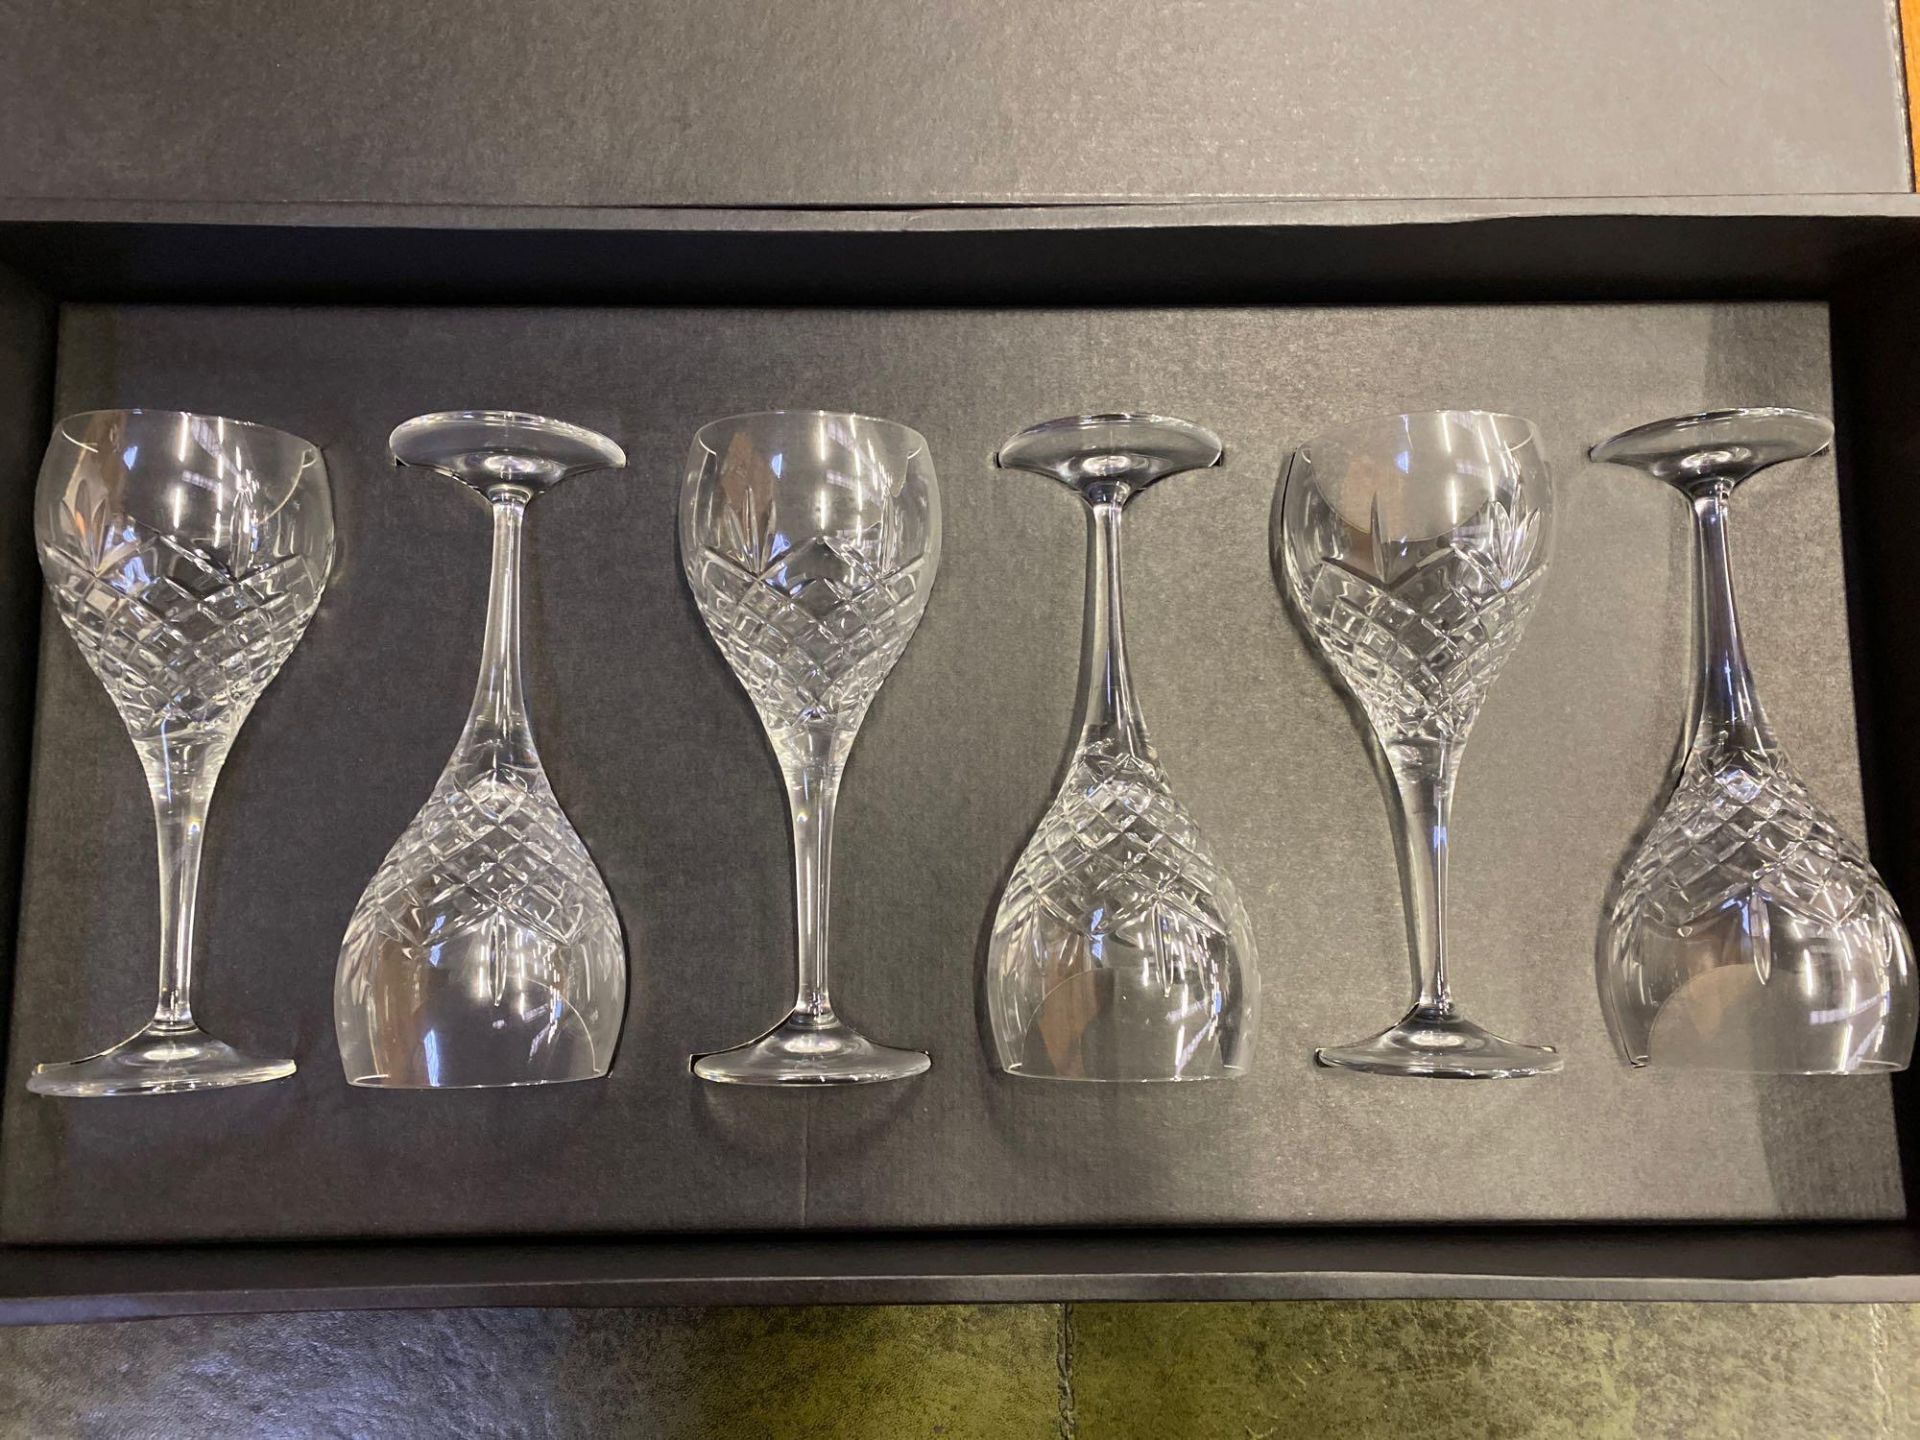 A box containing six Gleneagles of Edinburgh crystal wine glasses